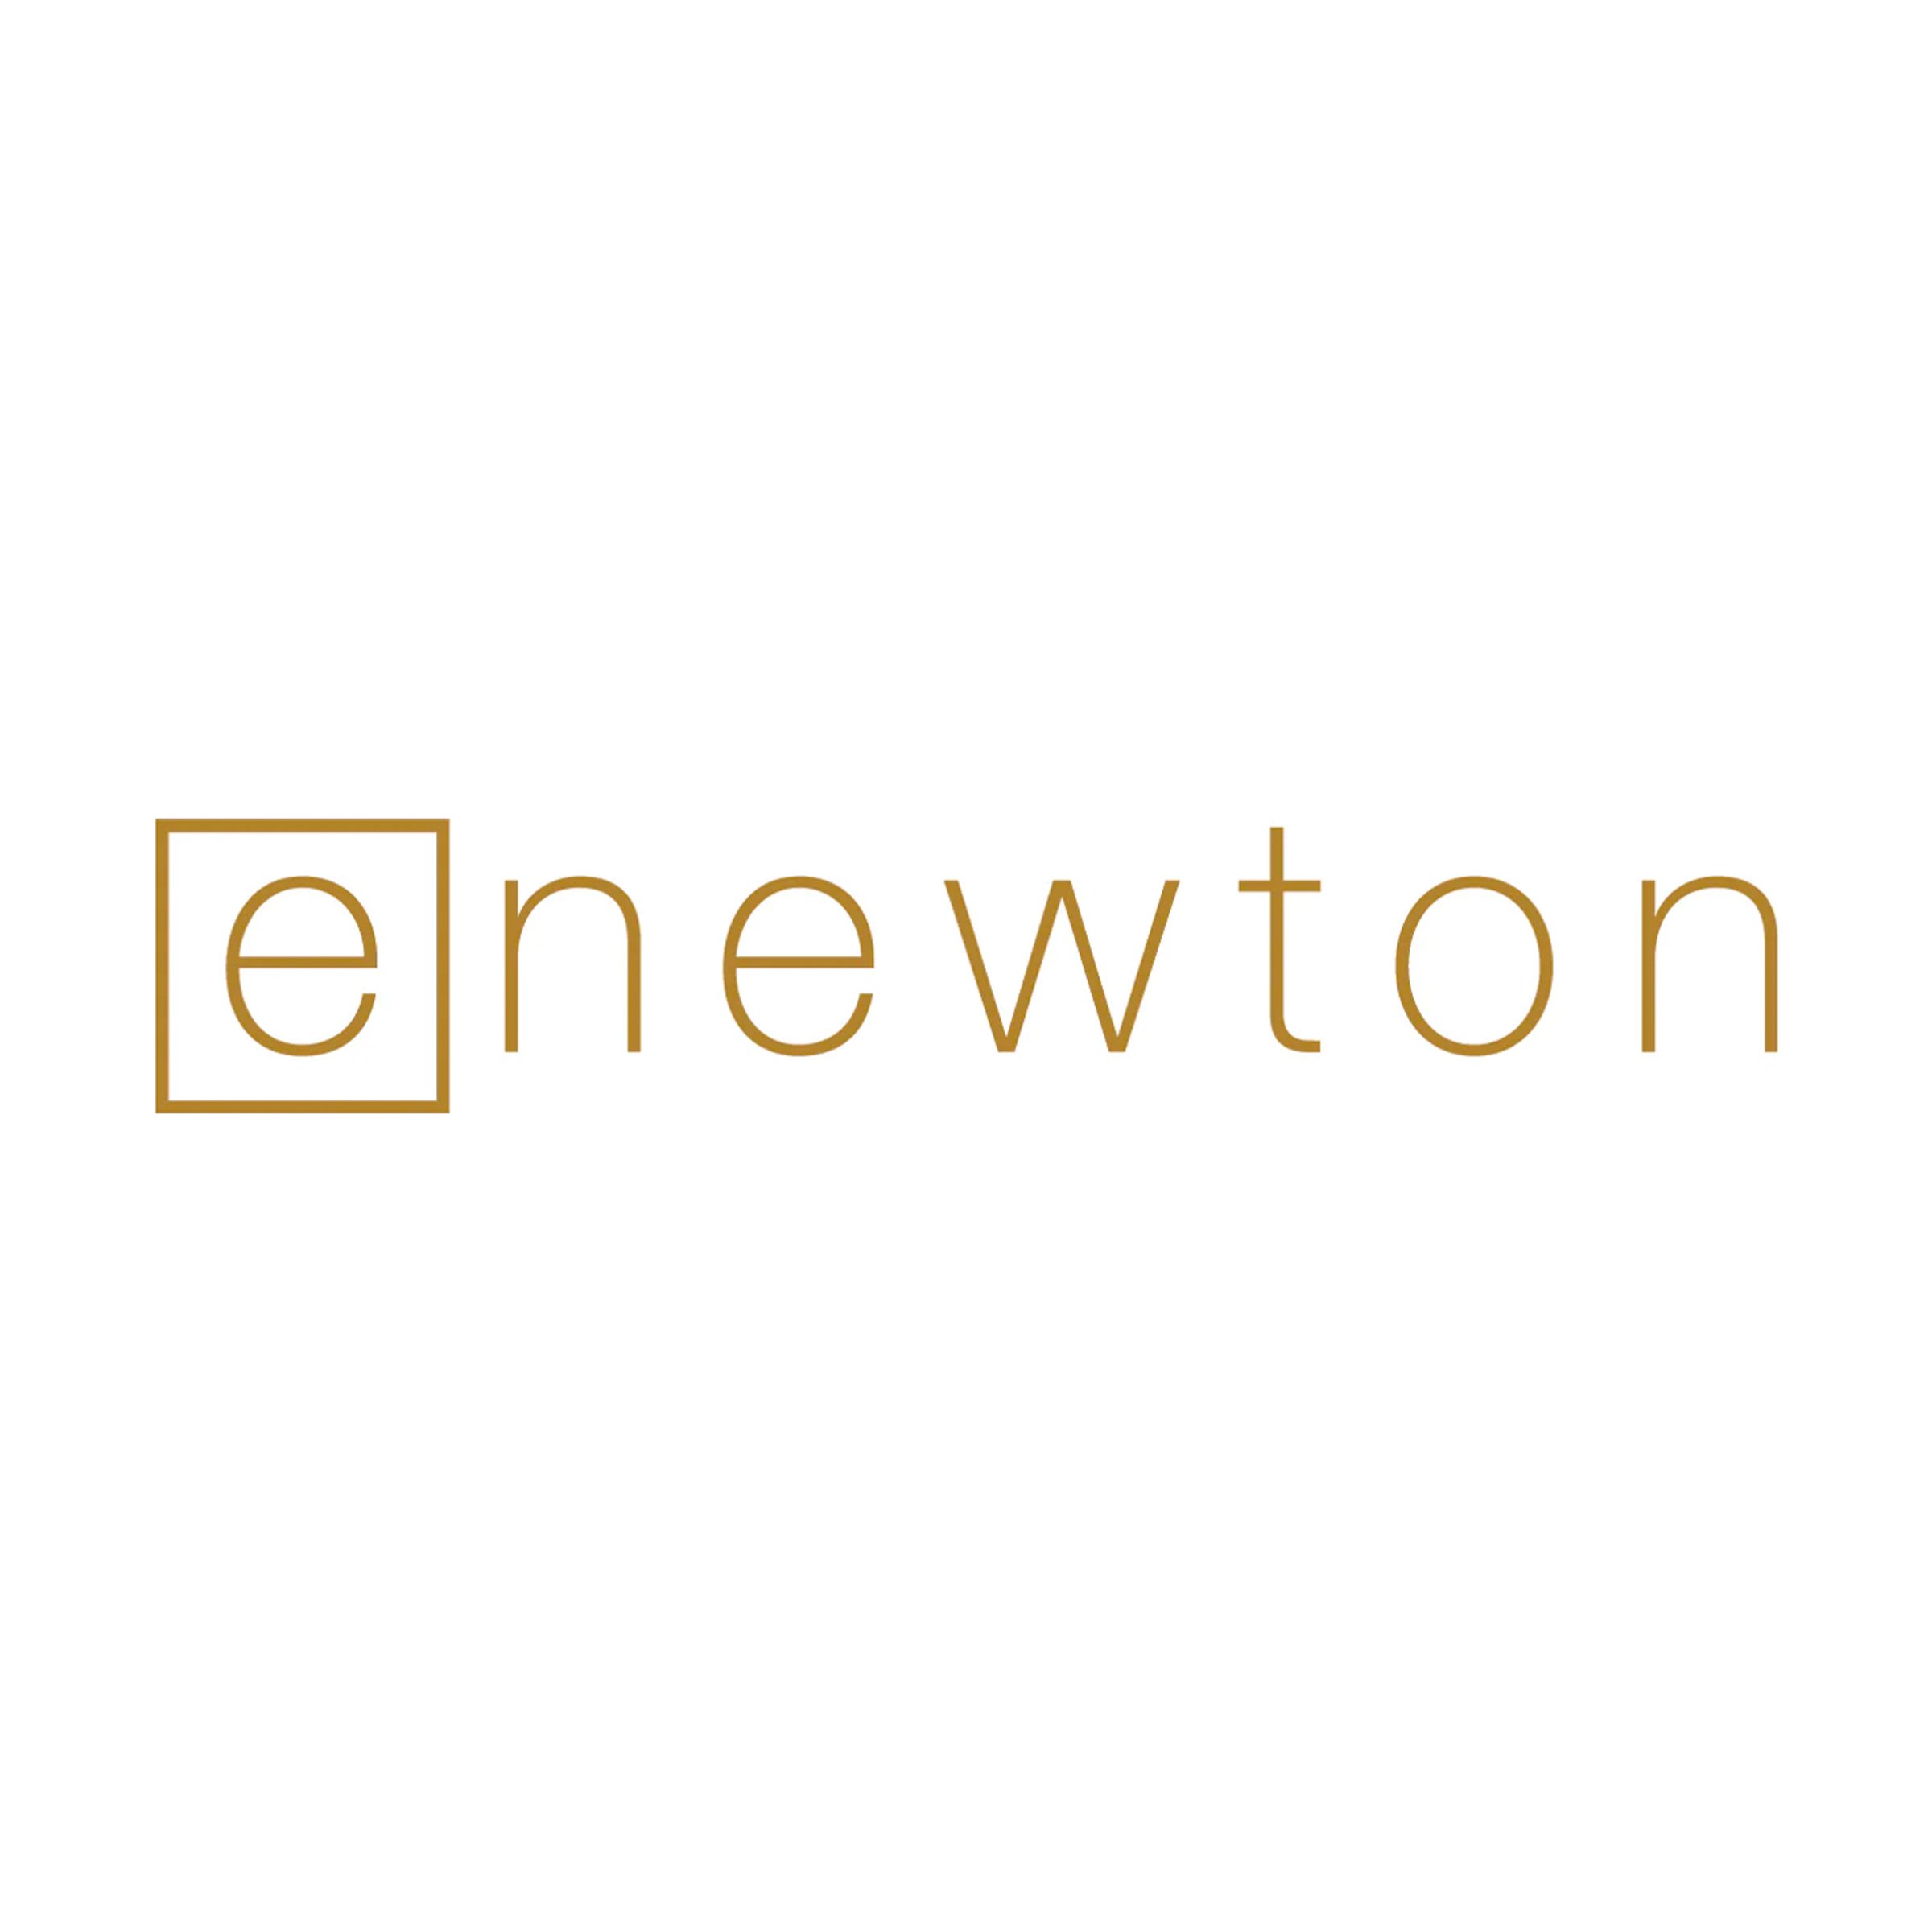 enewton-logo.jpg